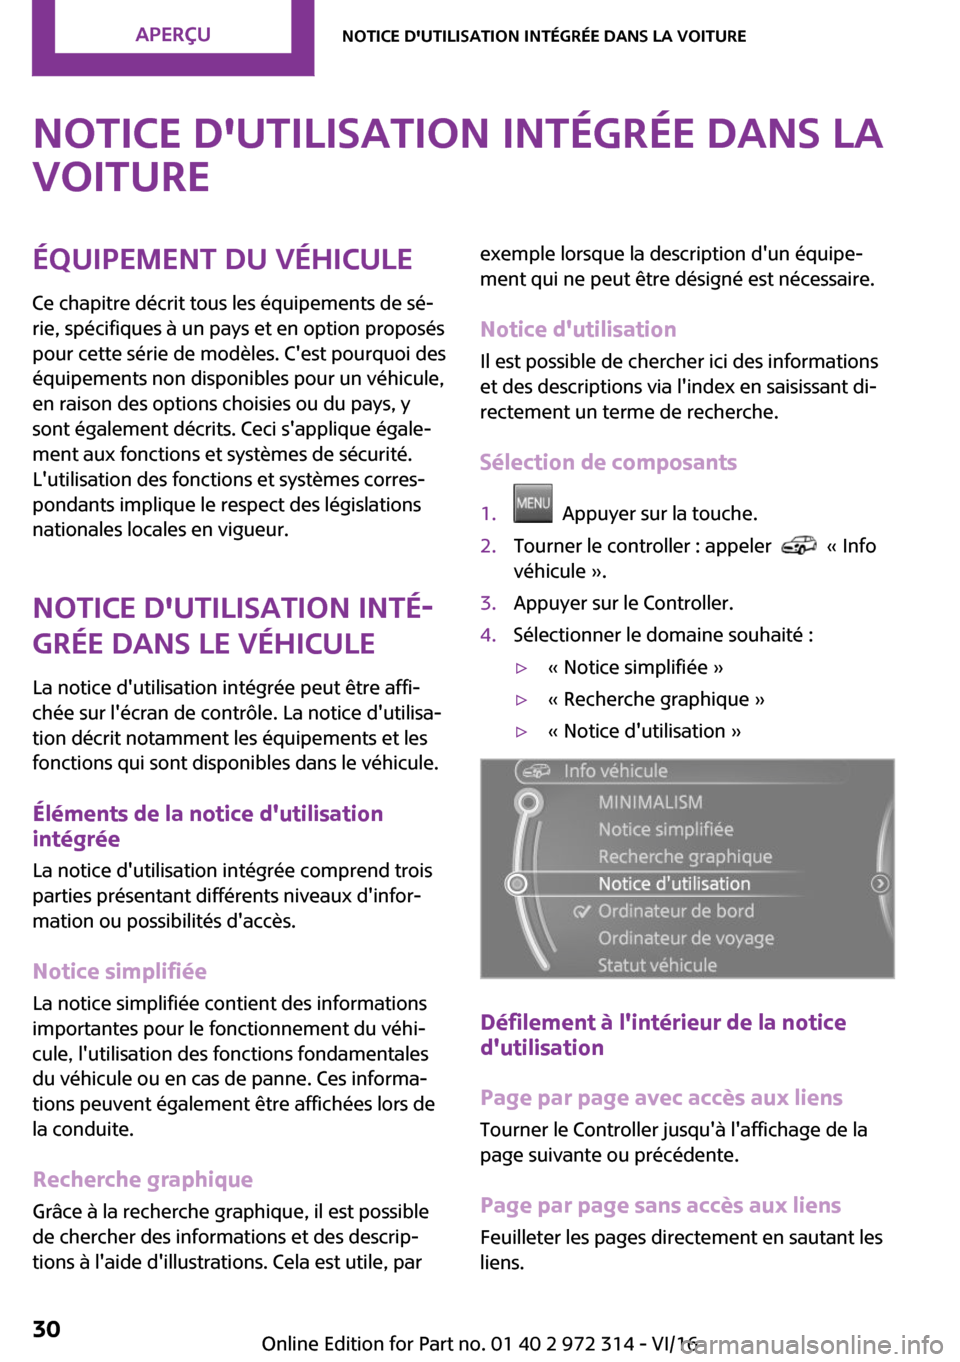 MINI 3 door 2016  Manuel du propriétaire (in French) �N�o�t�i�c�e��d��u�t�i�l�i�s�a�t�i�o�n��i�n�t�é�g�r�é�e��d�a�n�s��l�a
�v�o�i�t�u�r�e�